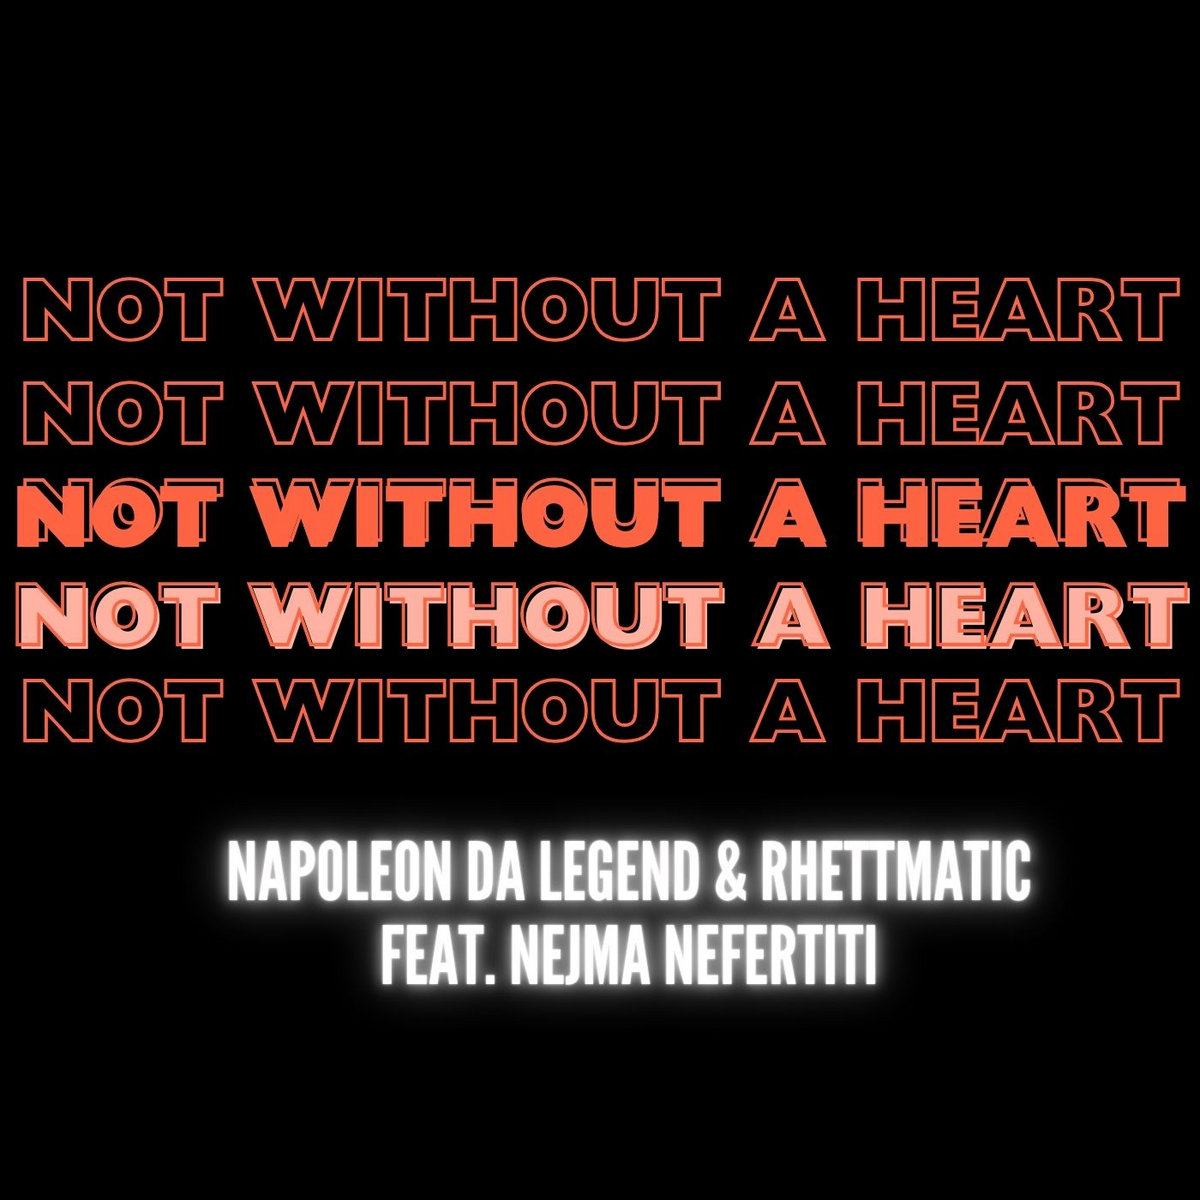 'NOT WITHOUT A HEART' @TeamNDL x @rhettmatic Feat. @nejmanefertiti Taken from the upcoming album 'LEGMATIC' 🔊 rhettmatic.bandcamp.com/album/not-with…